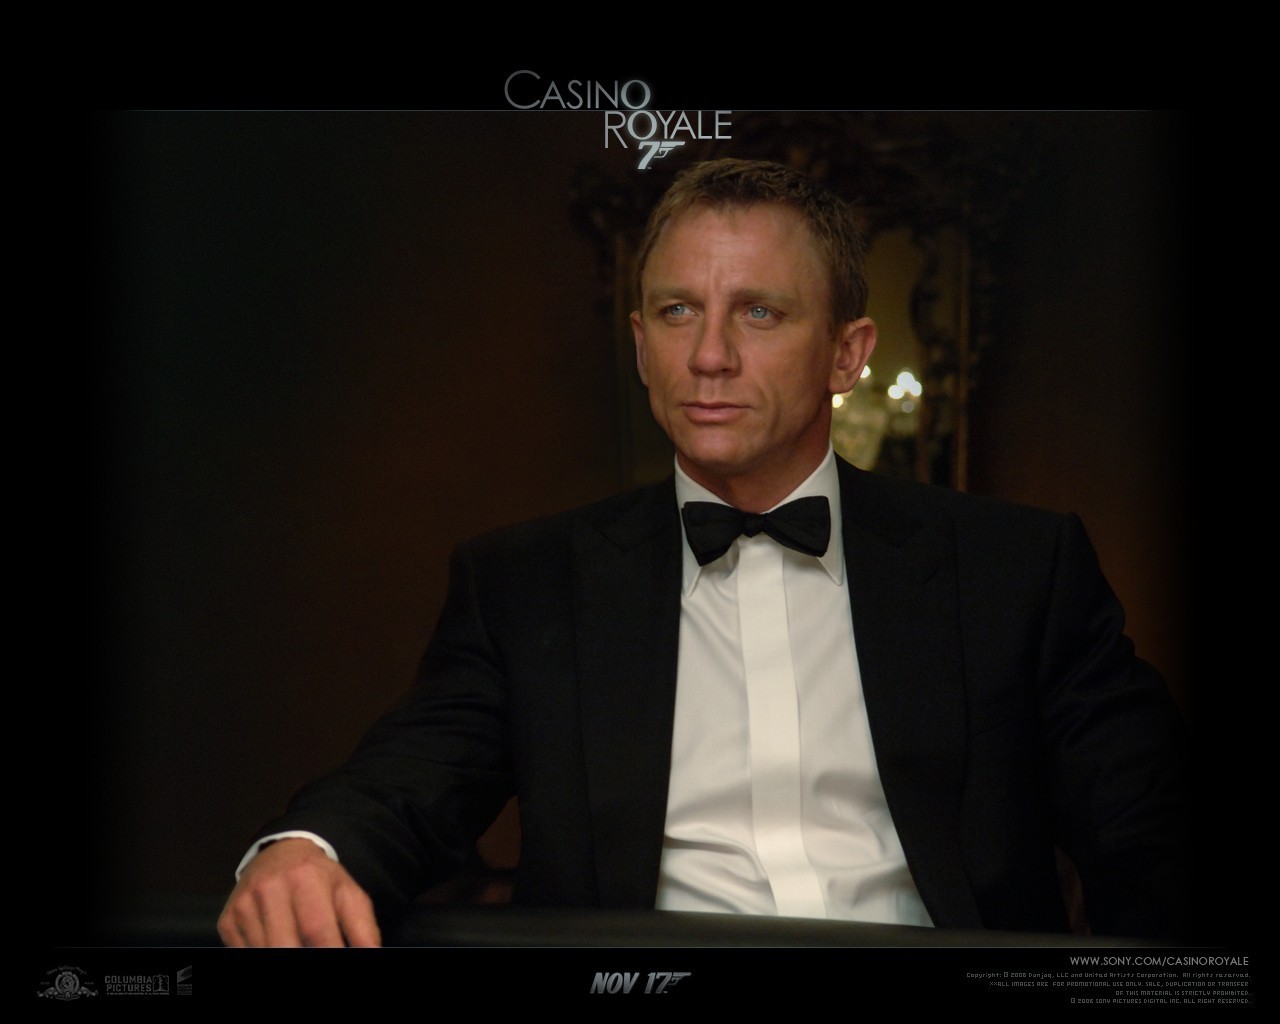 Casino Royale - James Bond Wallpaper (9614140) - Fanpop